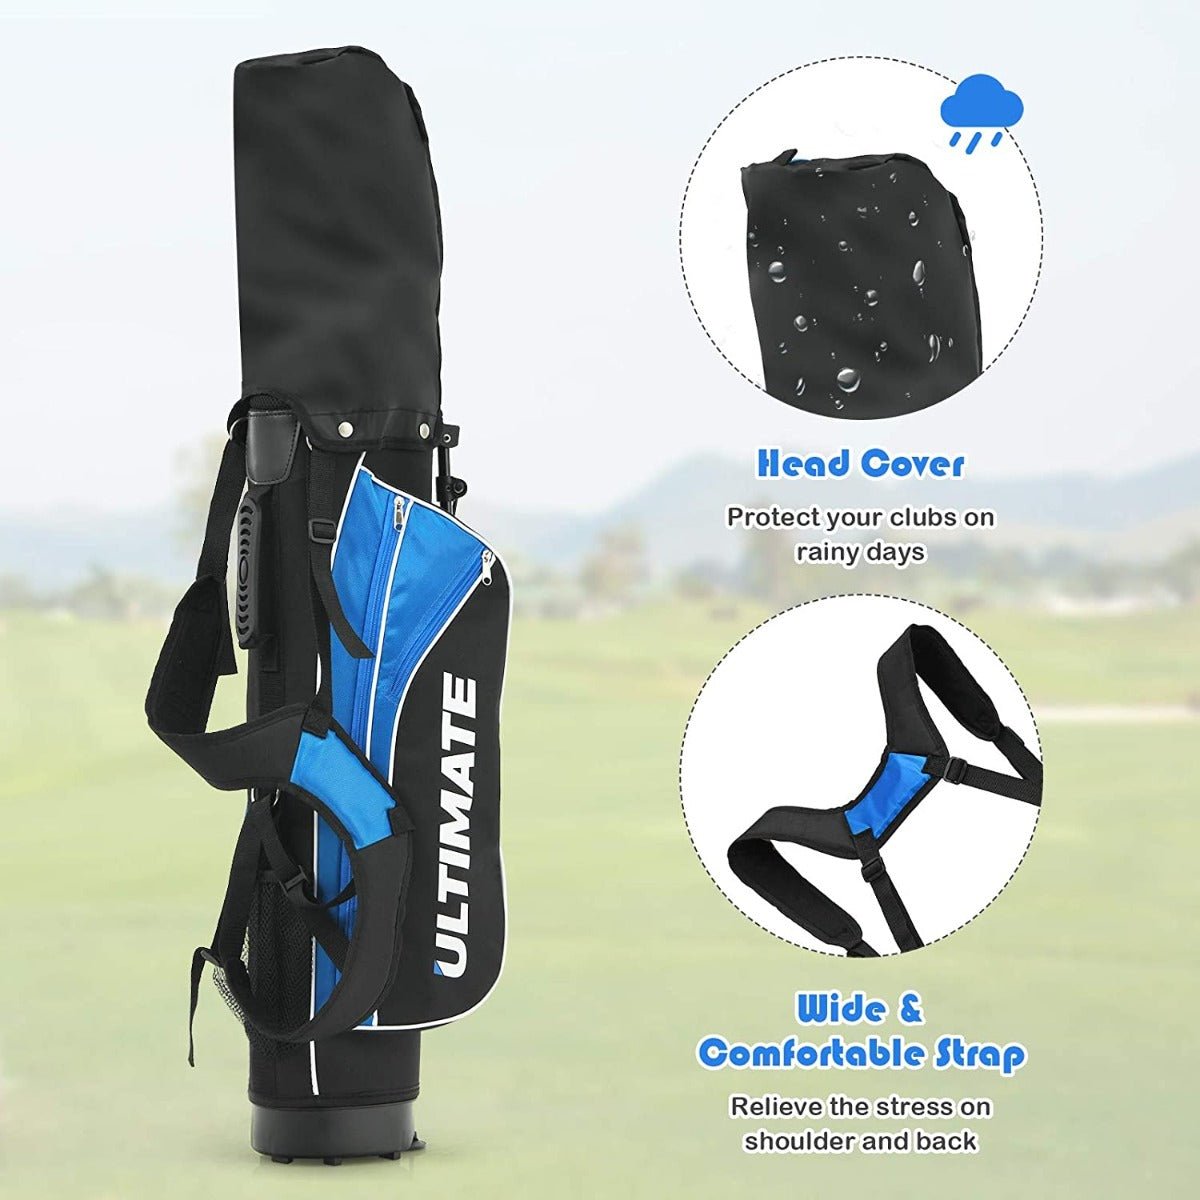 Junior Golf Set: Fairway Wood, Irons, Putter, Portable Stand Bag